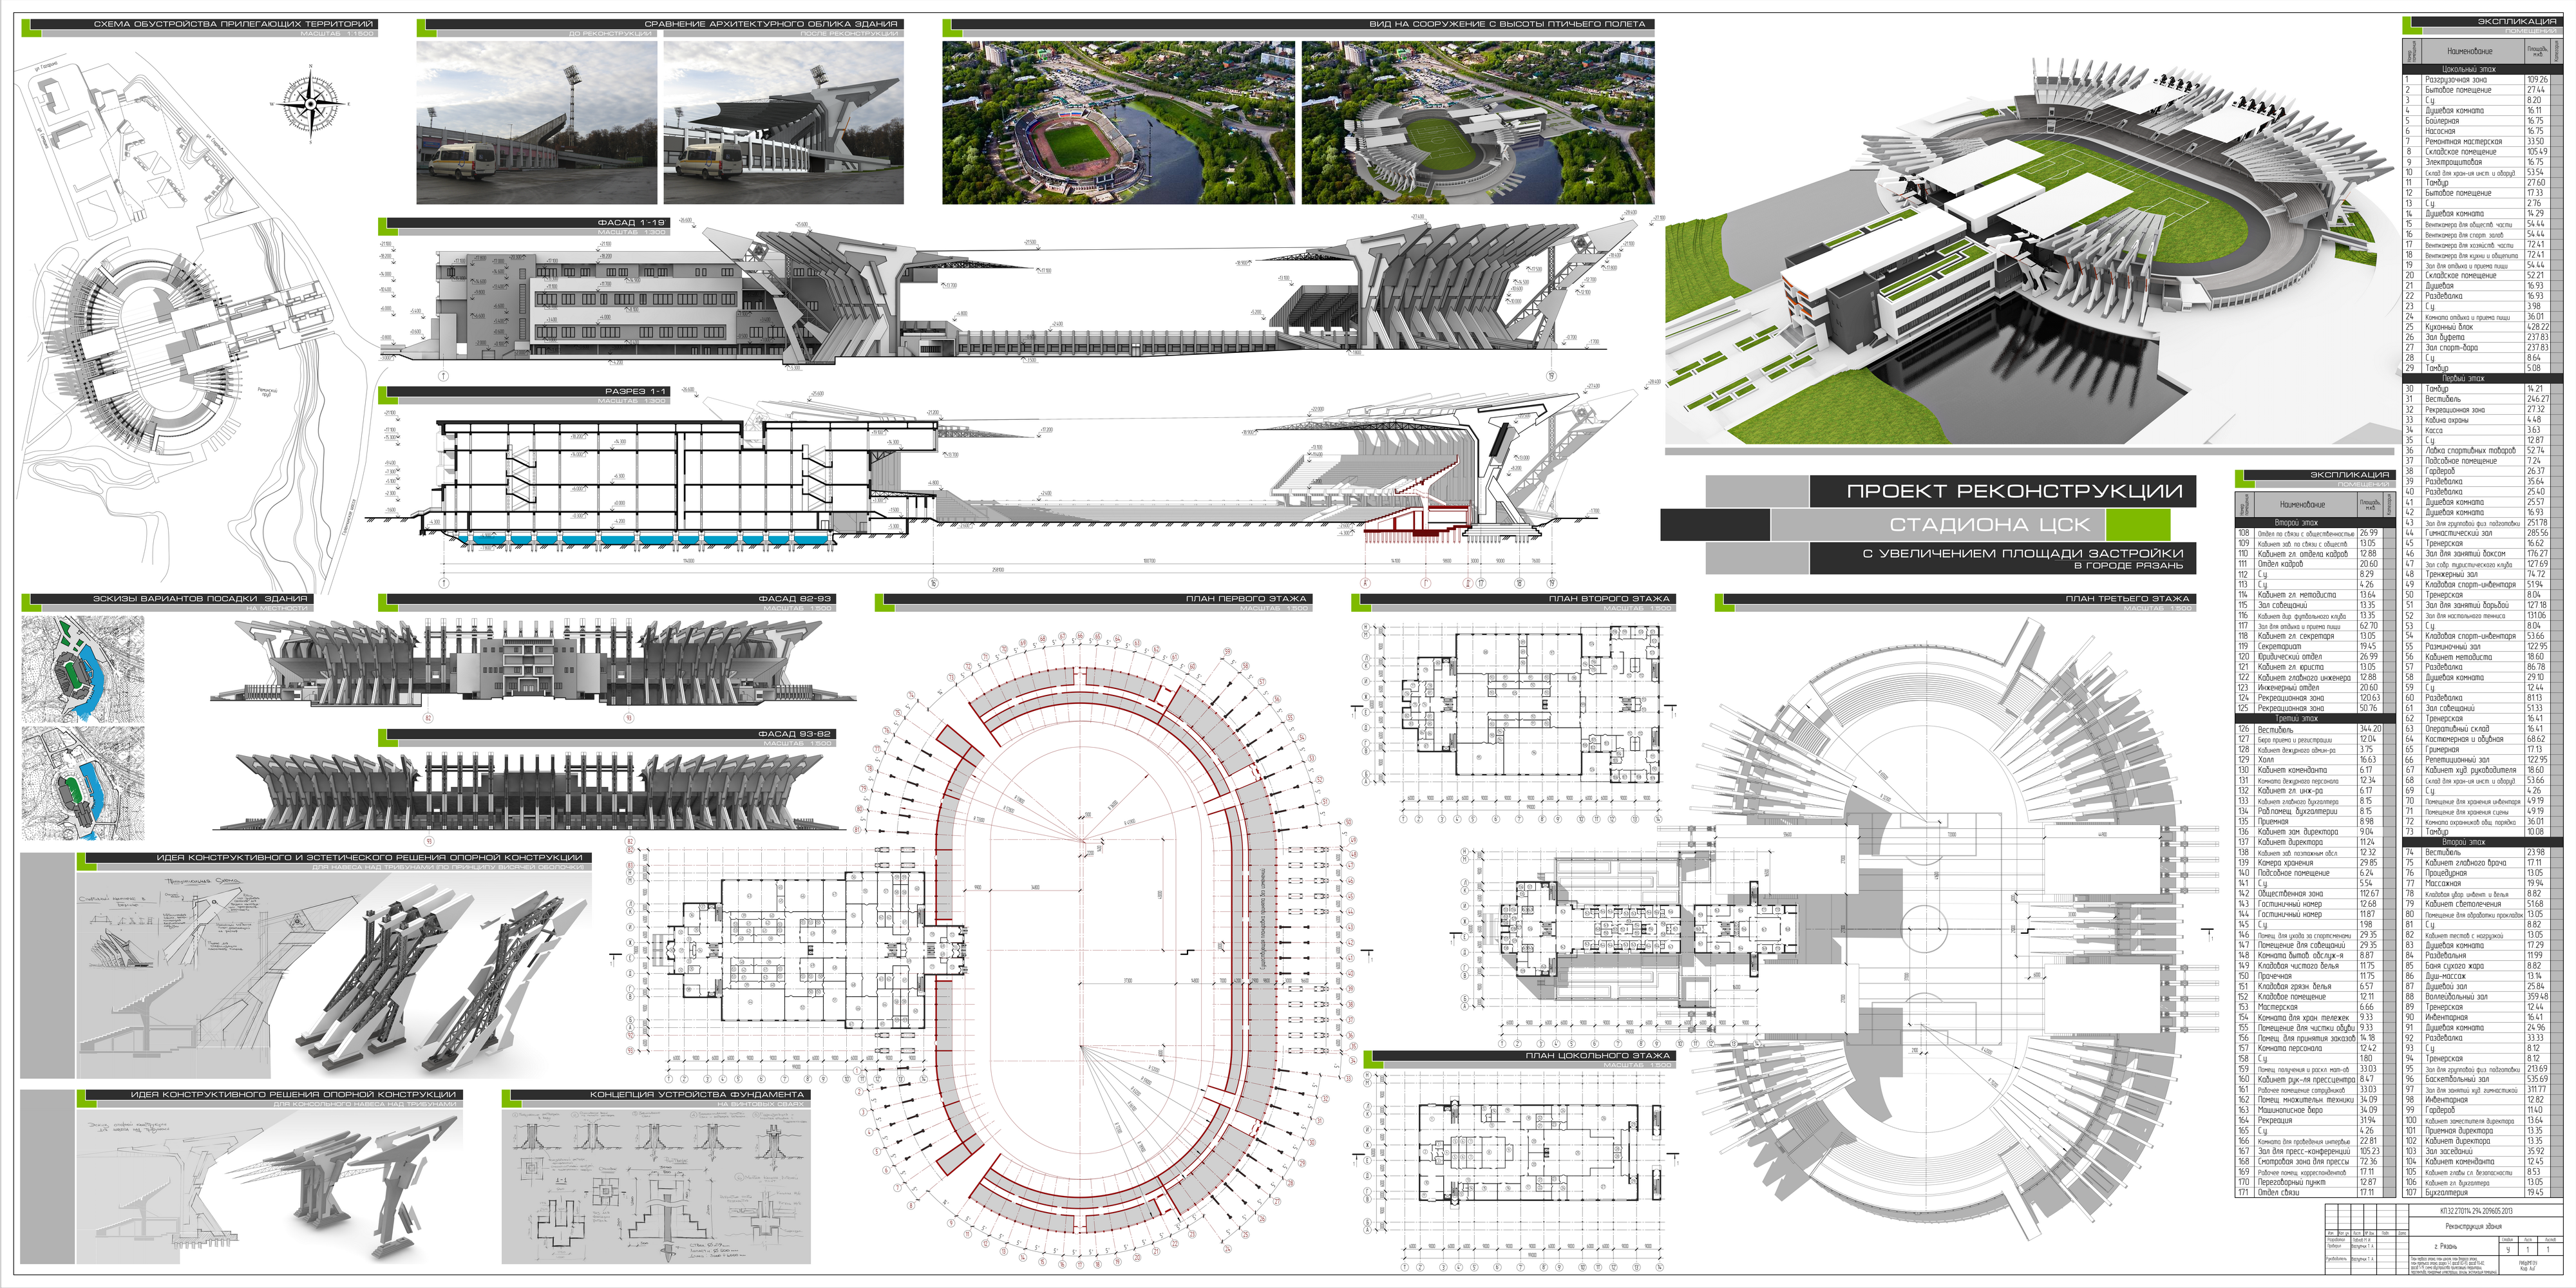 Project of Stadium Reconstruction